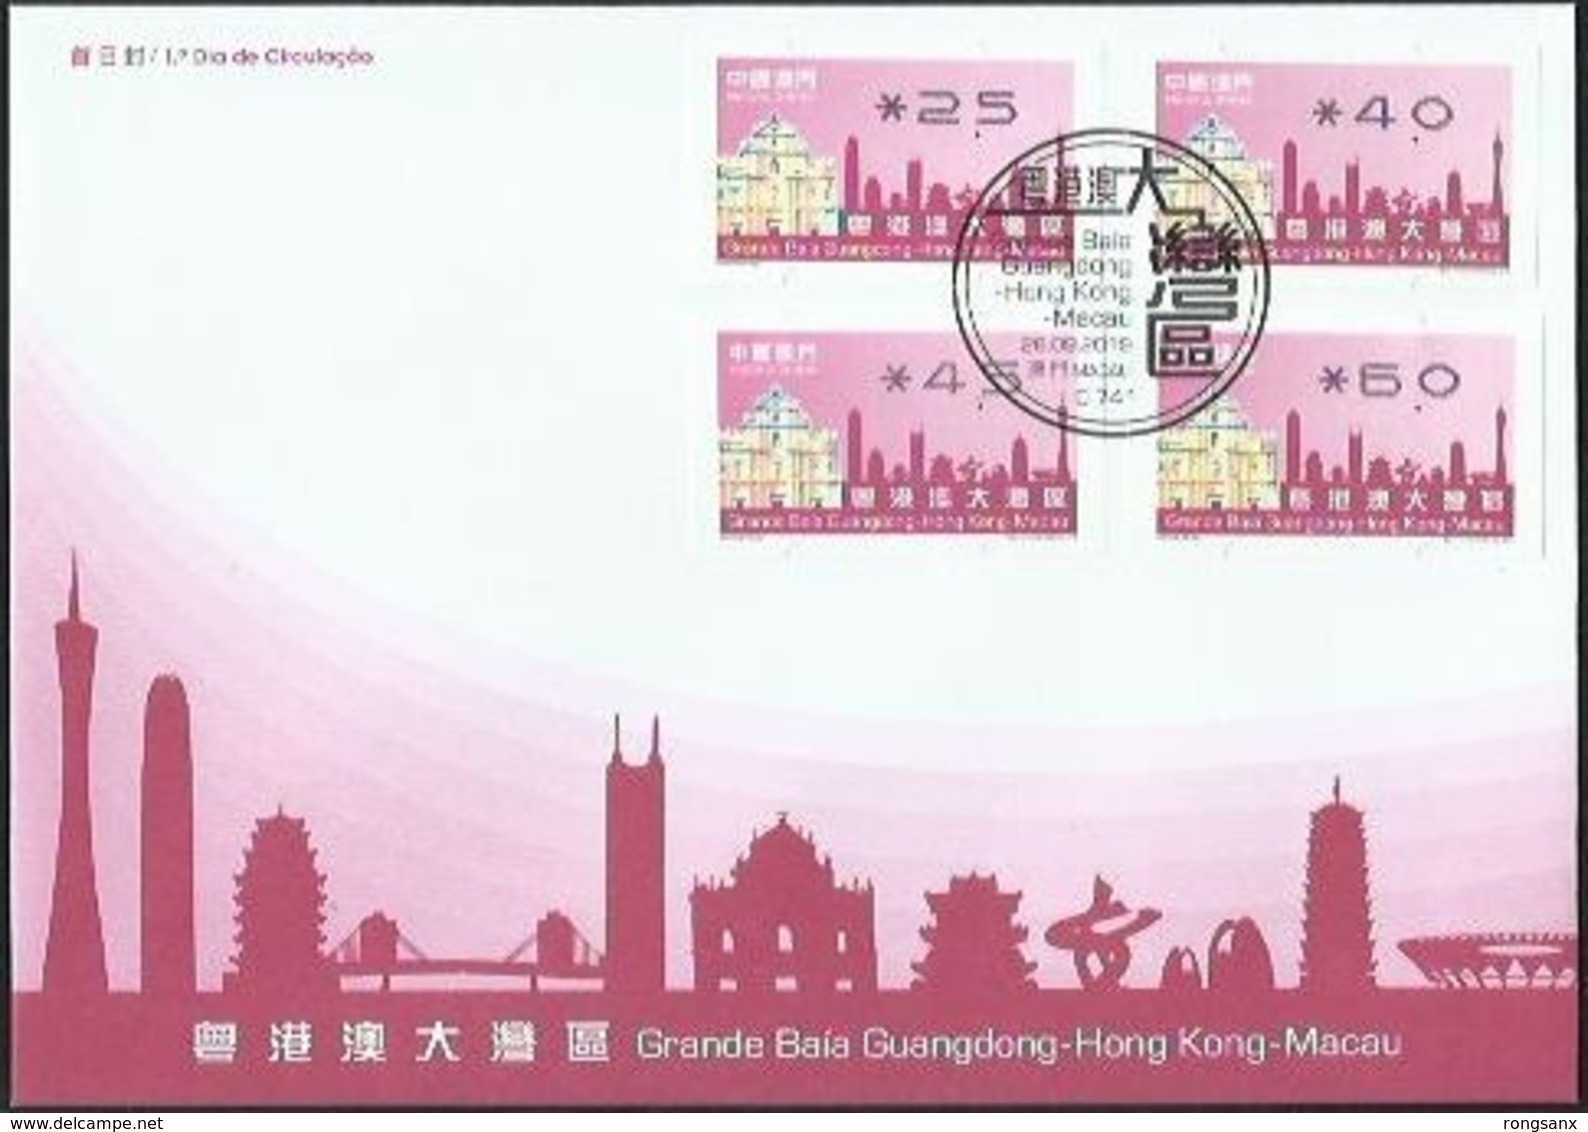 MACAO/MACAU 2019 Guangdong HK Macau Greater Bay Area ATM LABEL FDC - FDC